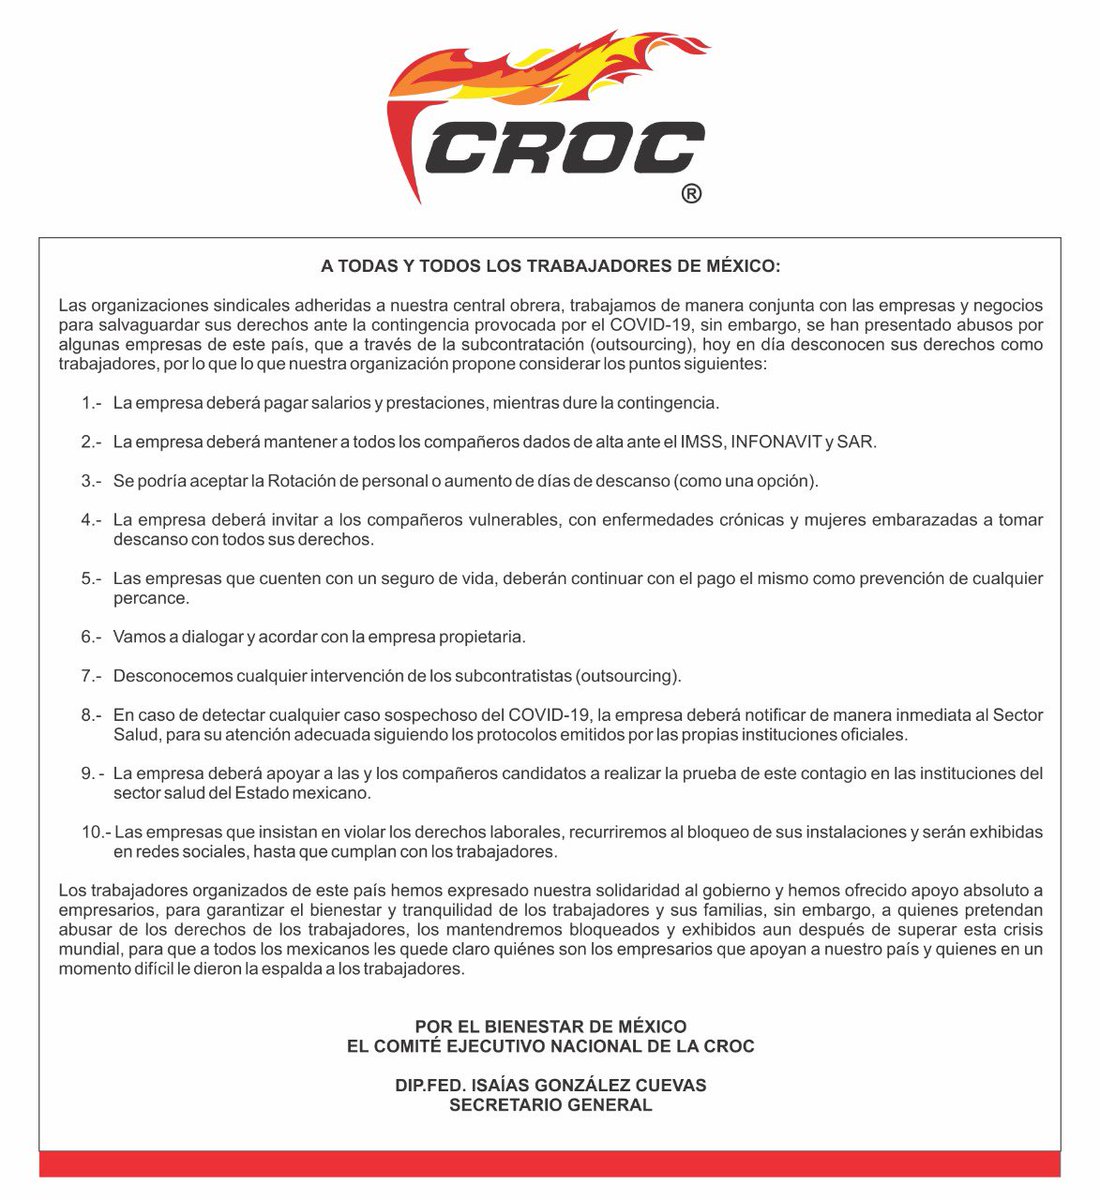 CROC on Comunicado #Covid_19 https://t.co/PUYTjIWUGG" / Twitter